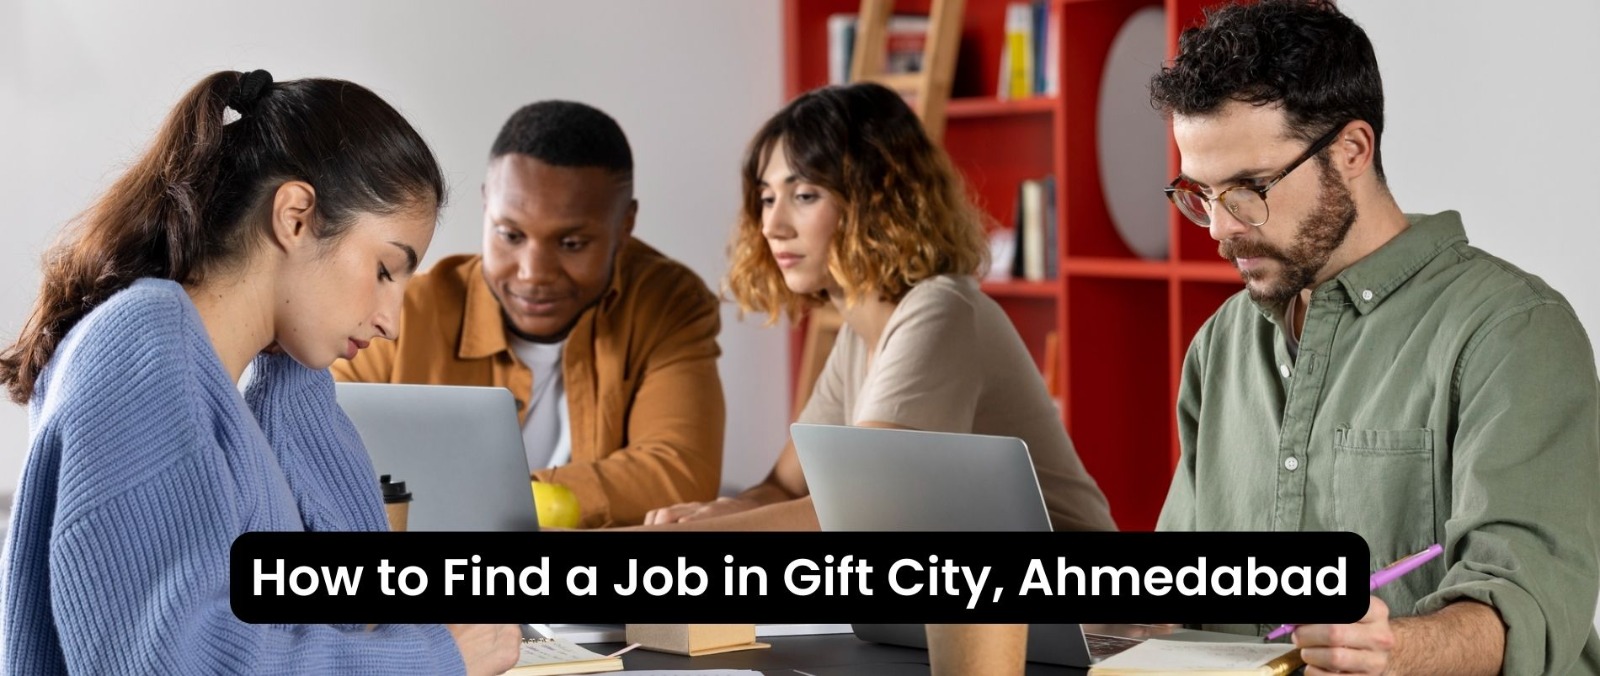 Job Vacancies In Gift City Ahmedabad | Gift City Jobs in Ahmedabad